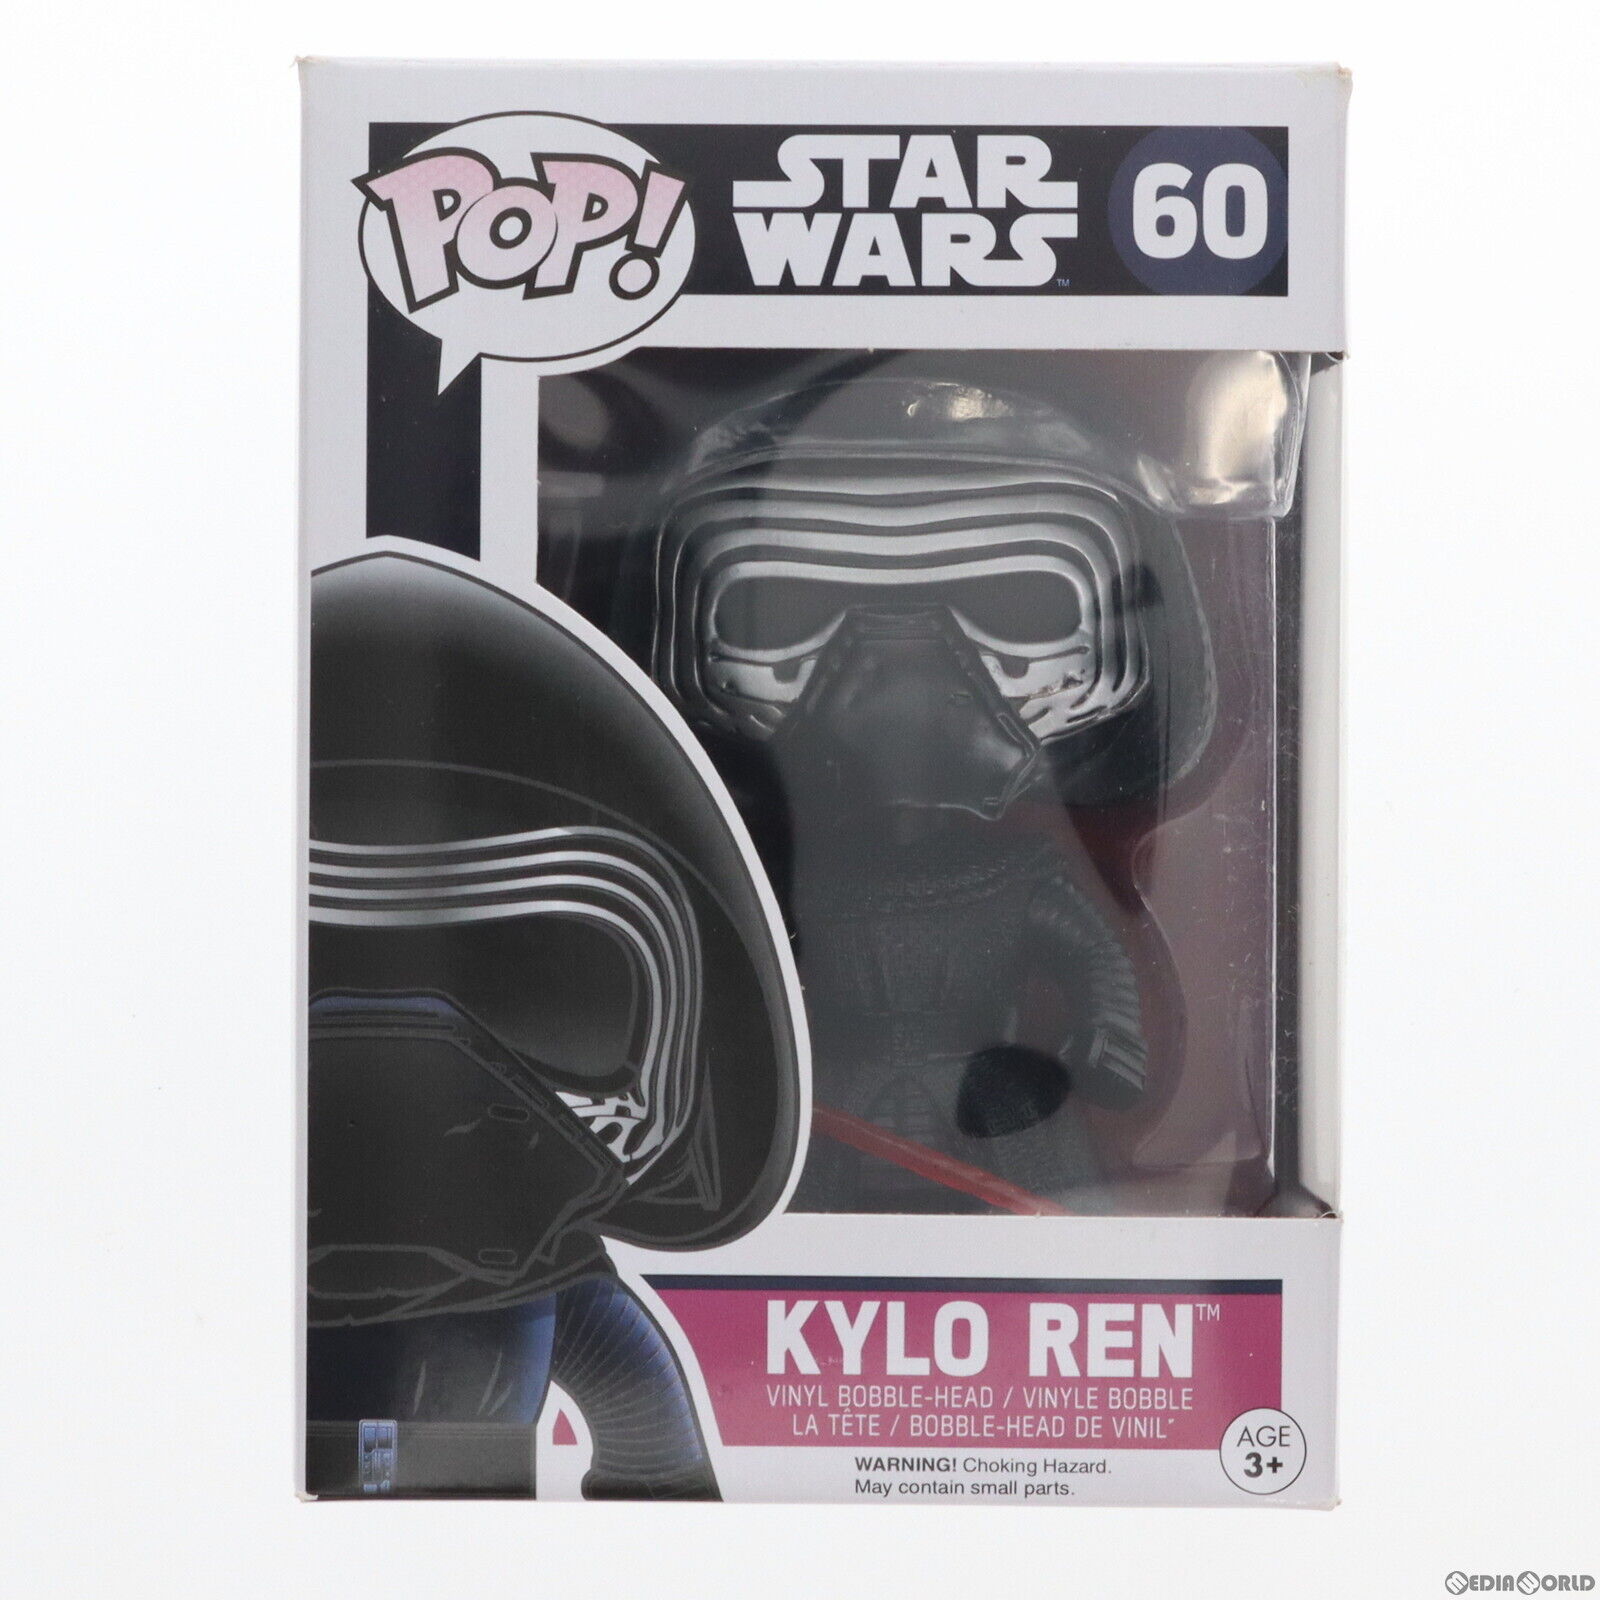 Sft Pop Star Wars 60 Kylo Ren Soft Vinyl Figure Funko Funko/Hot Toys 20150930